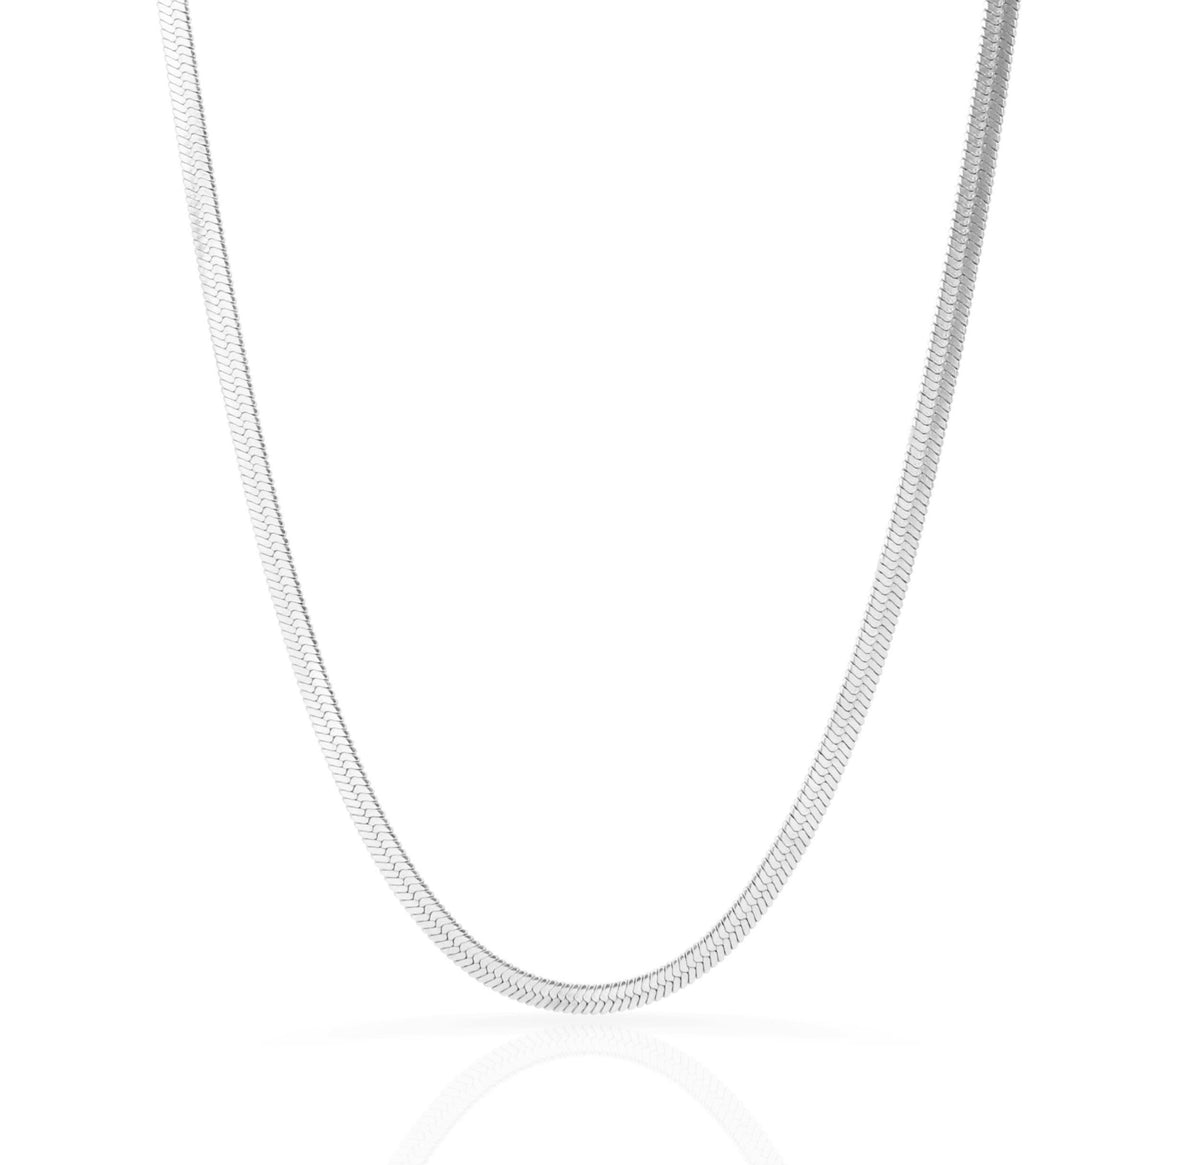 silver snake chain necklace waterproof jewelry